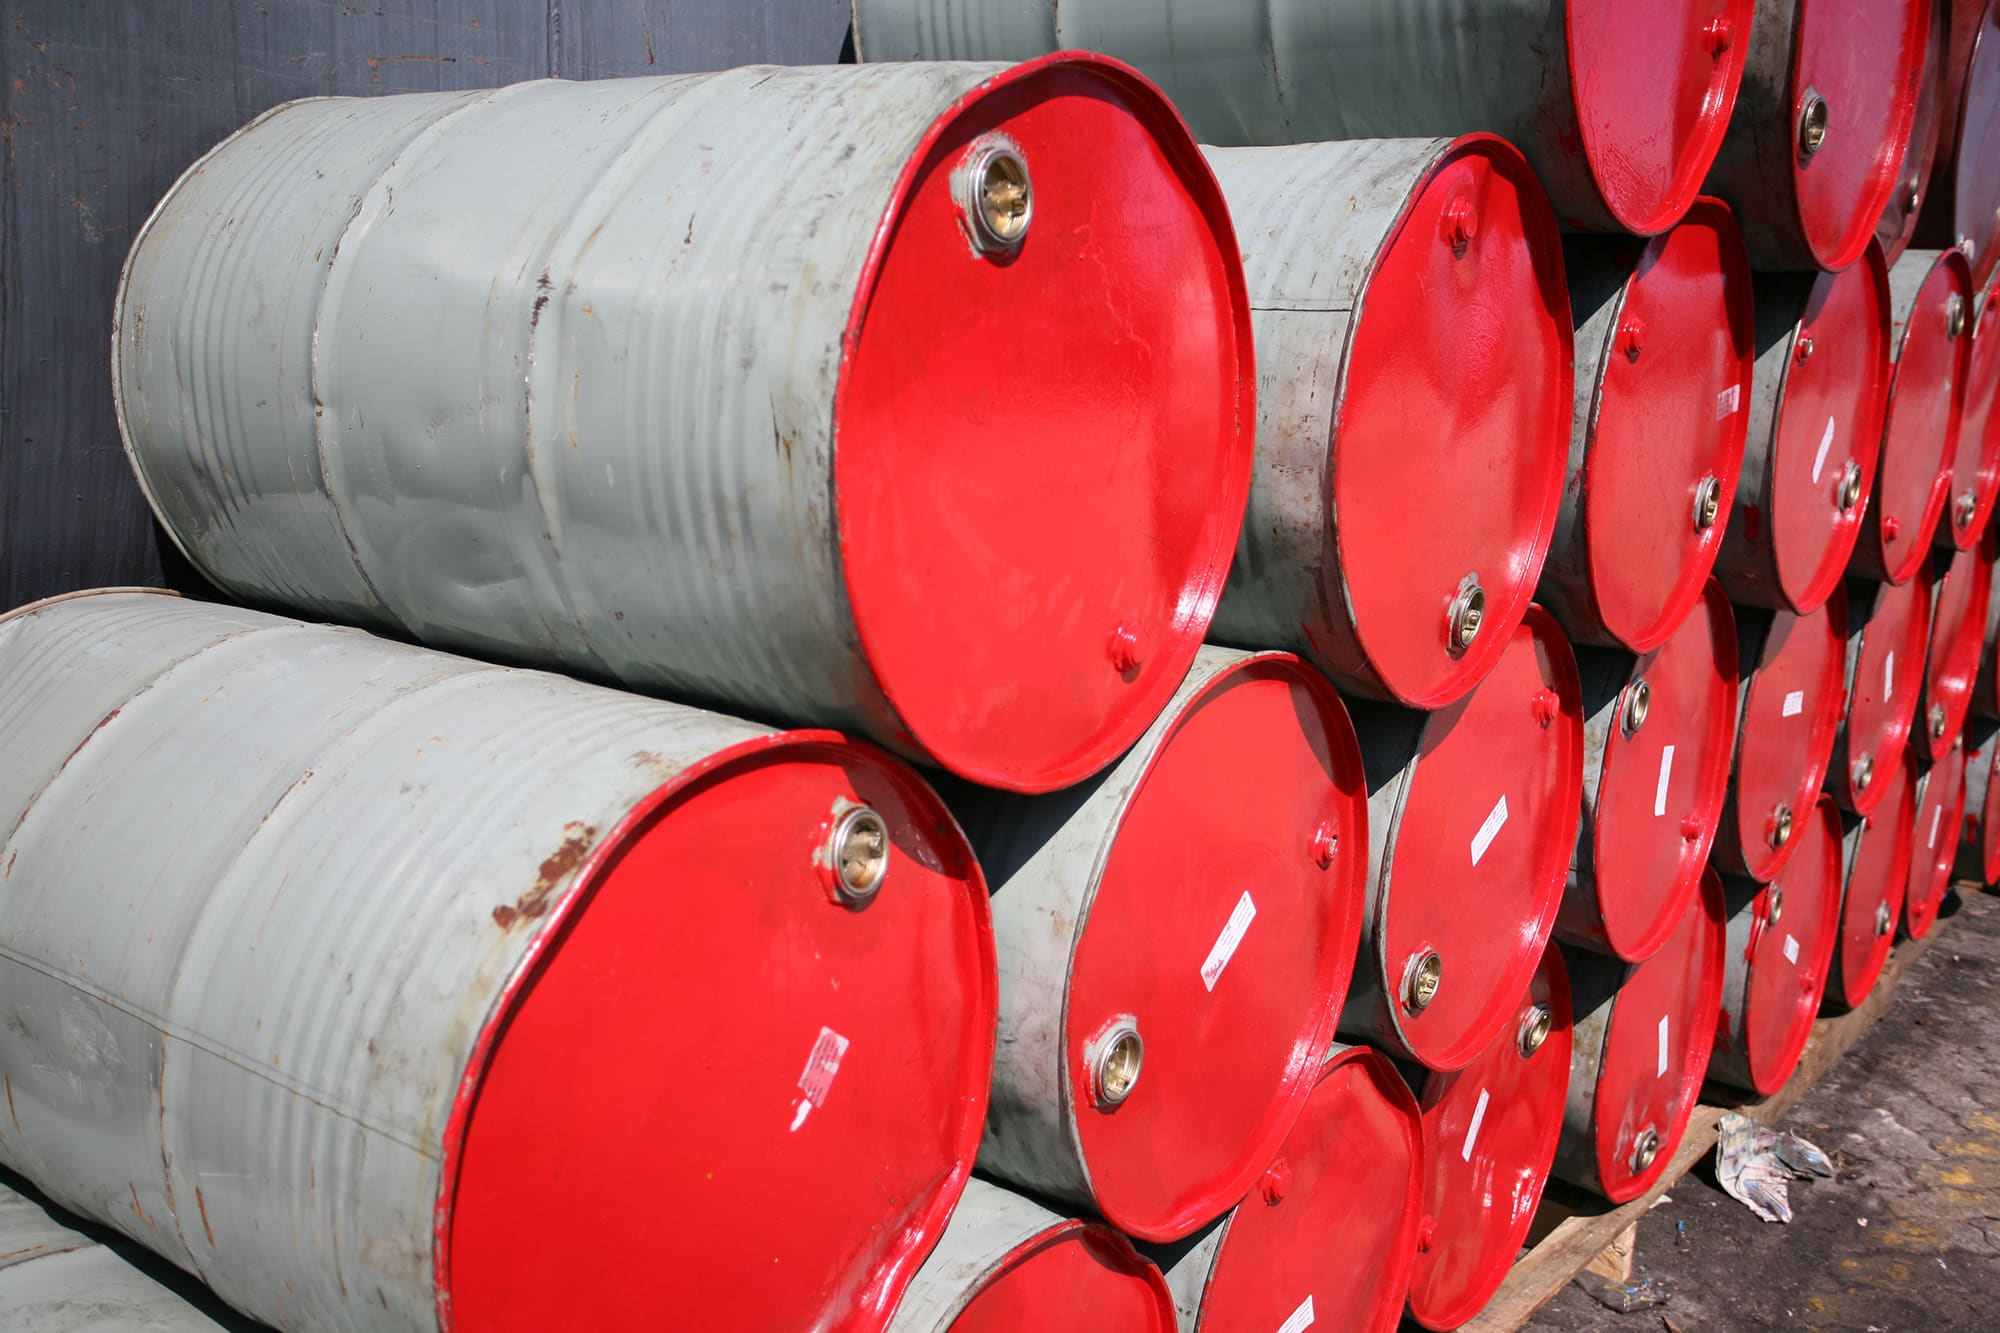 U.S. crude oil price tops $80 a barrel, the highest since 2014